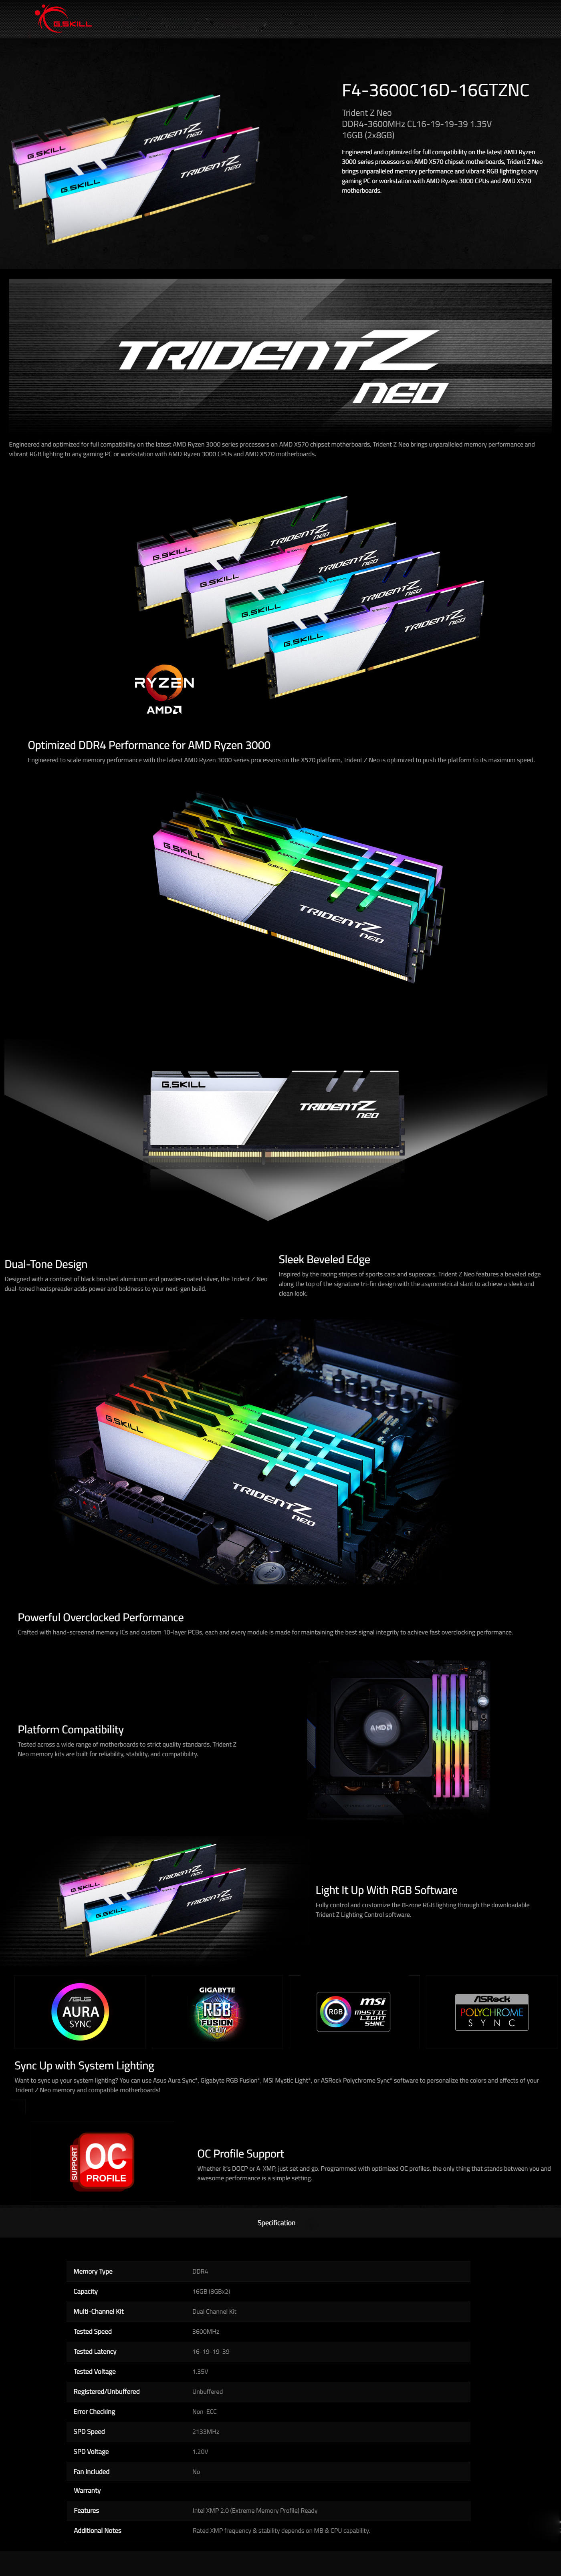 Buy Online G.skill Trident Z Neo 16GB (2 x 8GB) DDR4 3600MHz Desktop RAM (F4-3600C16D-16GTZNC)